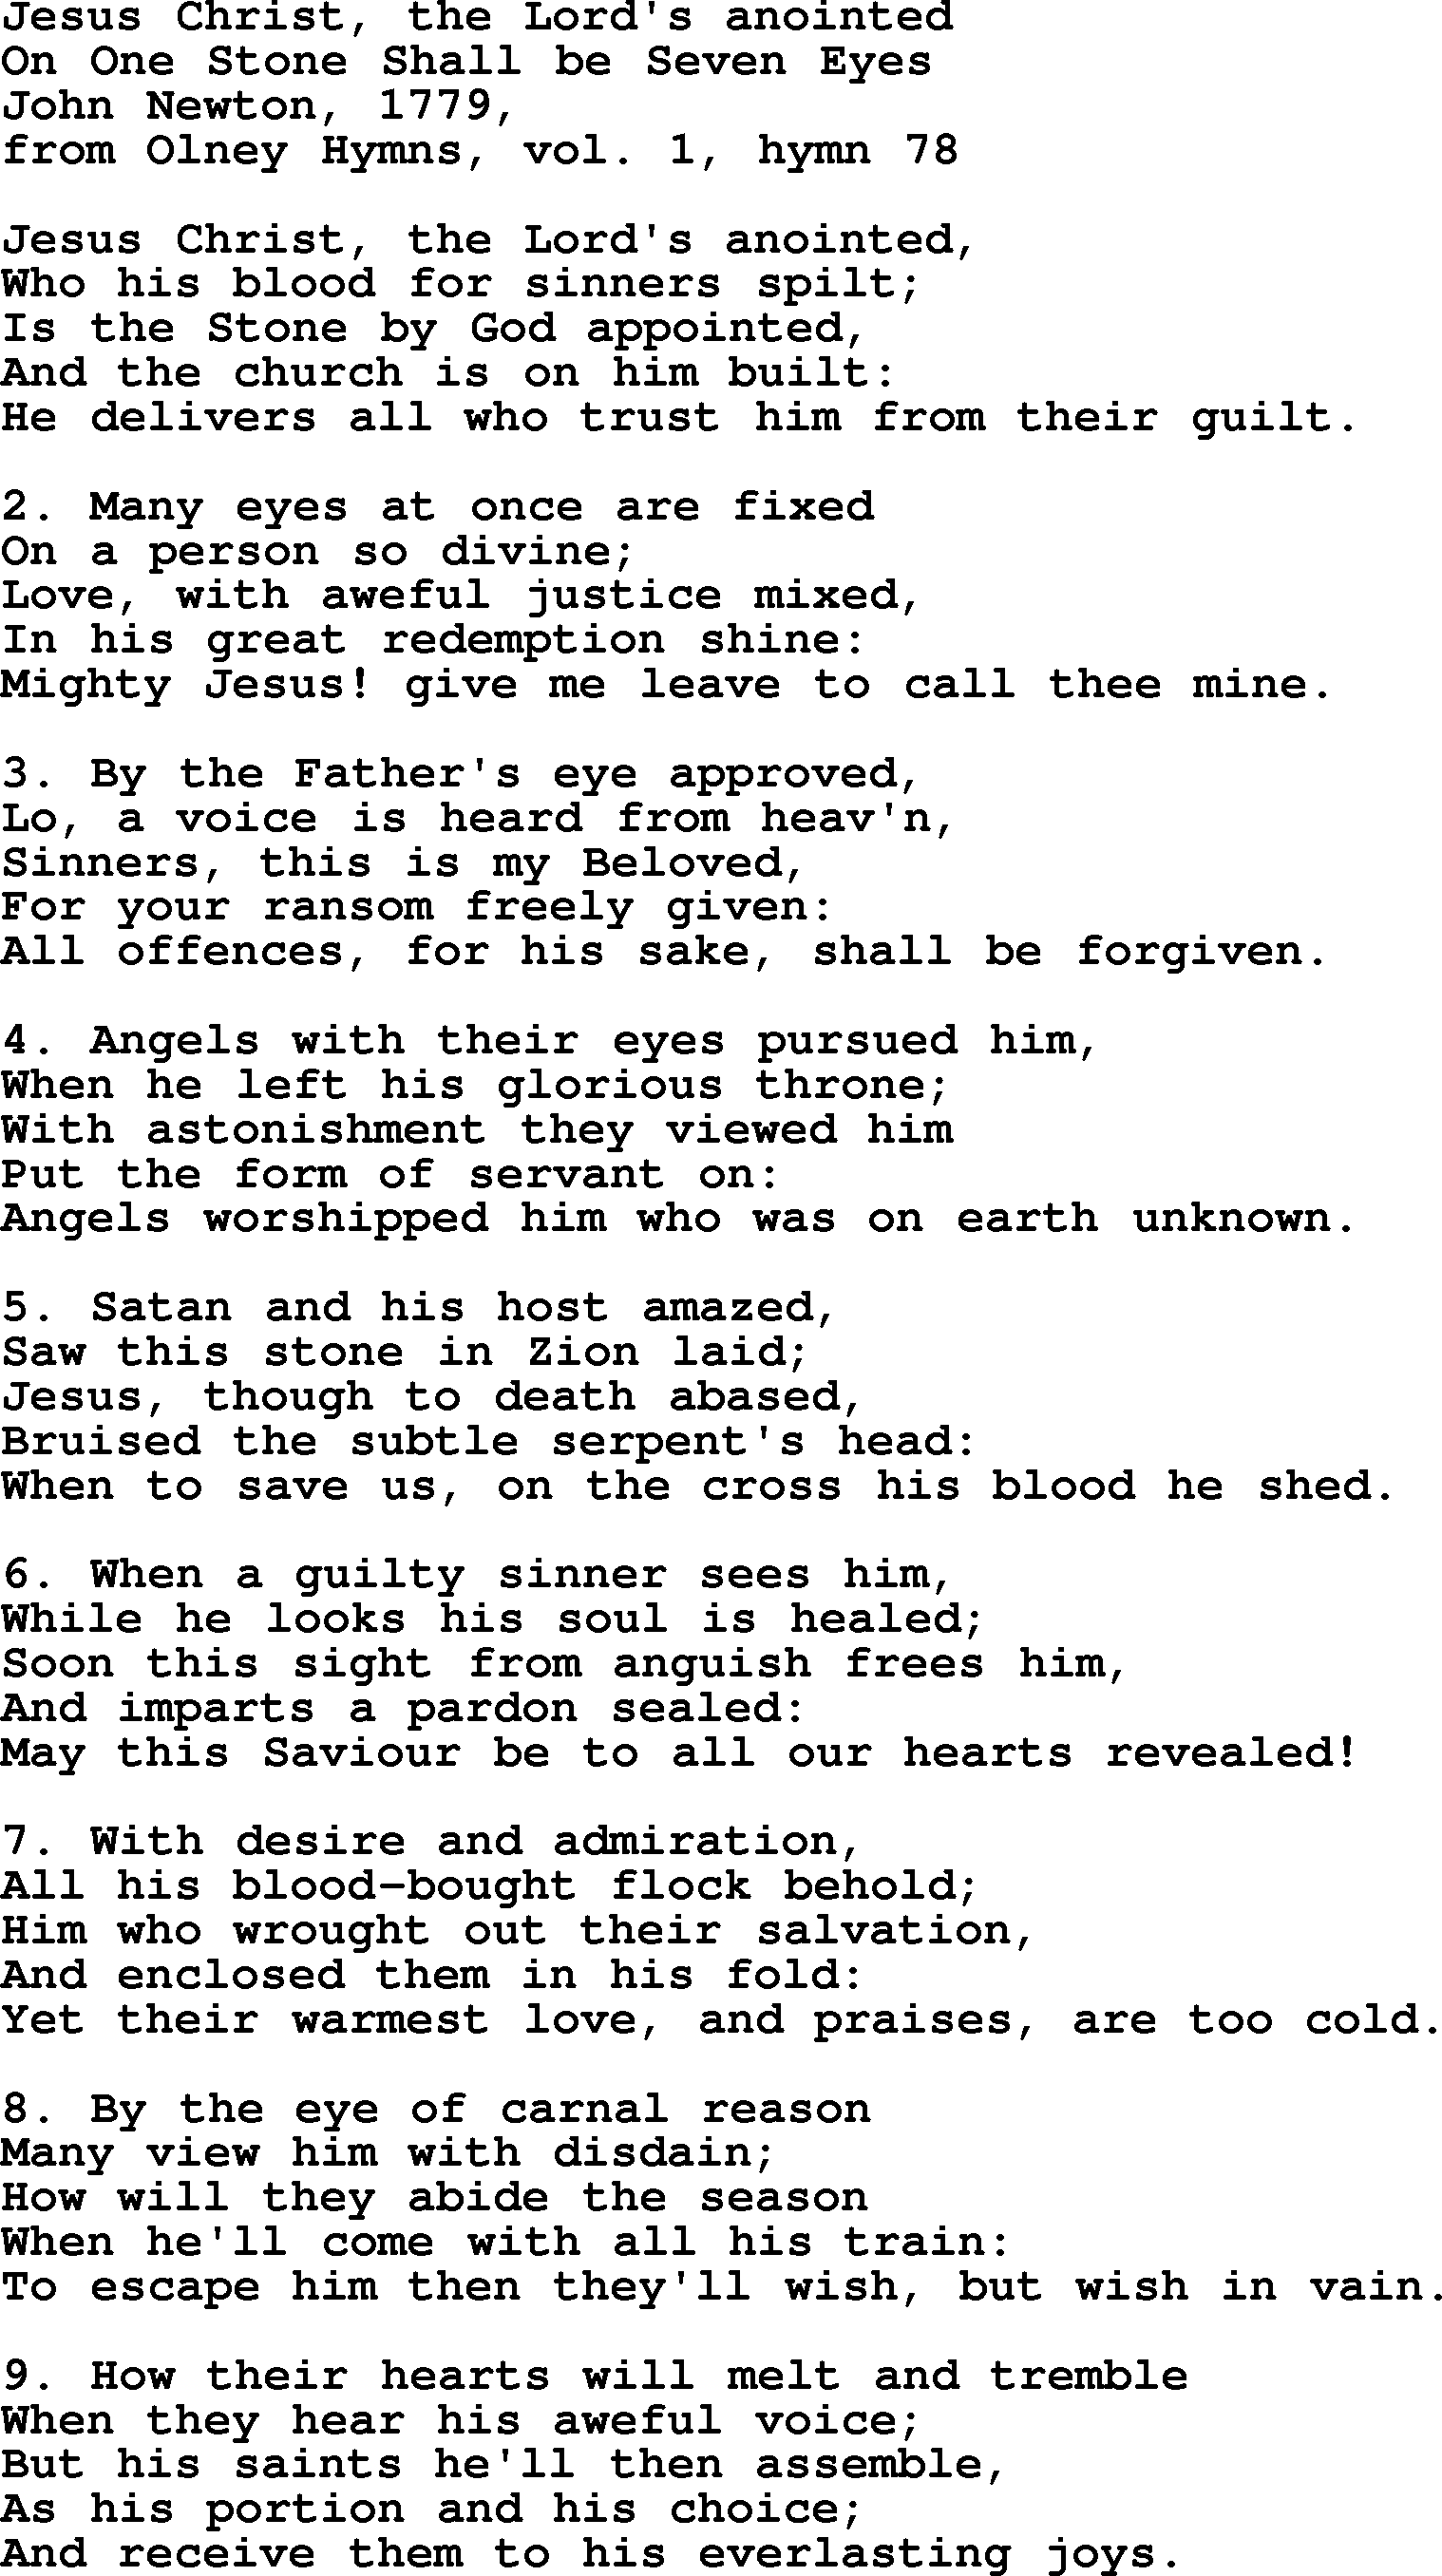 John Newton hymn: Jesus Christ, The Lord's Anointed, lyrics